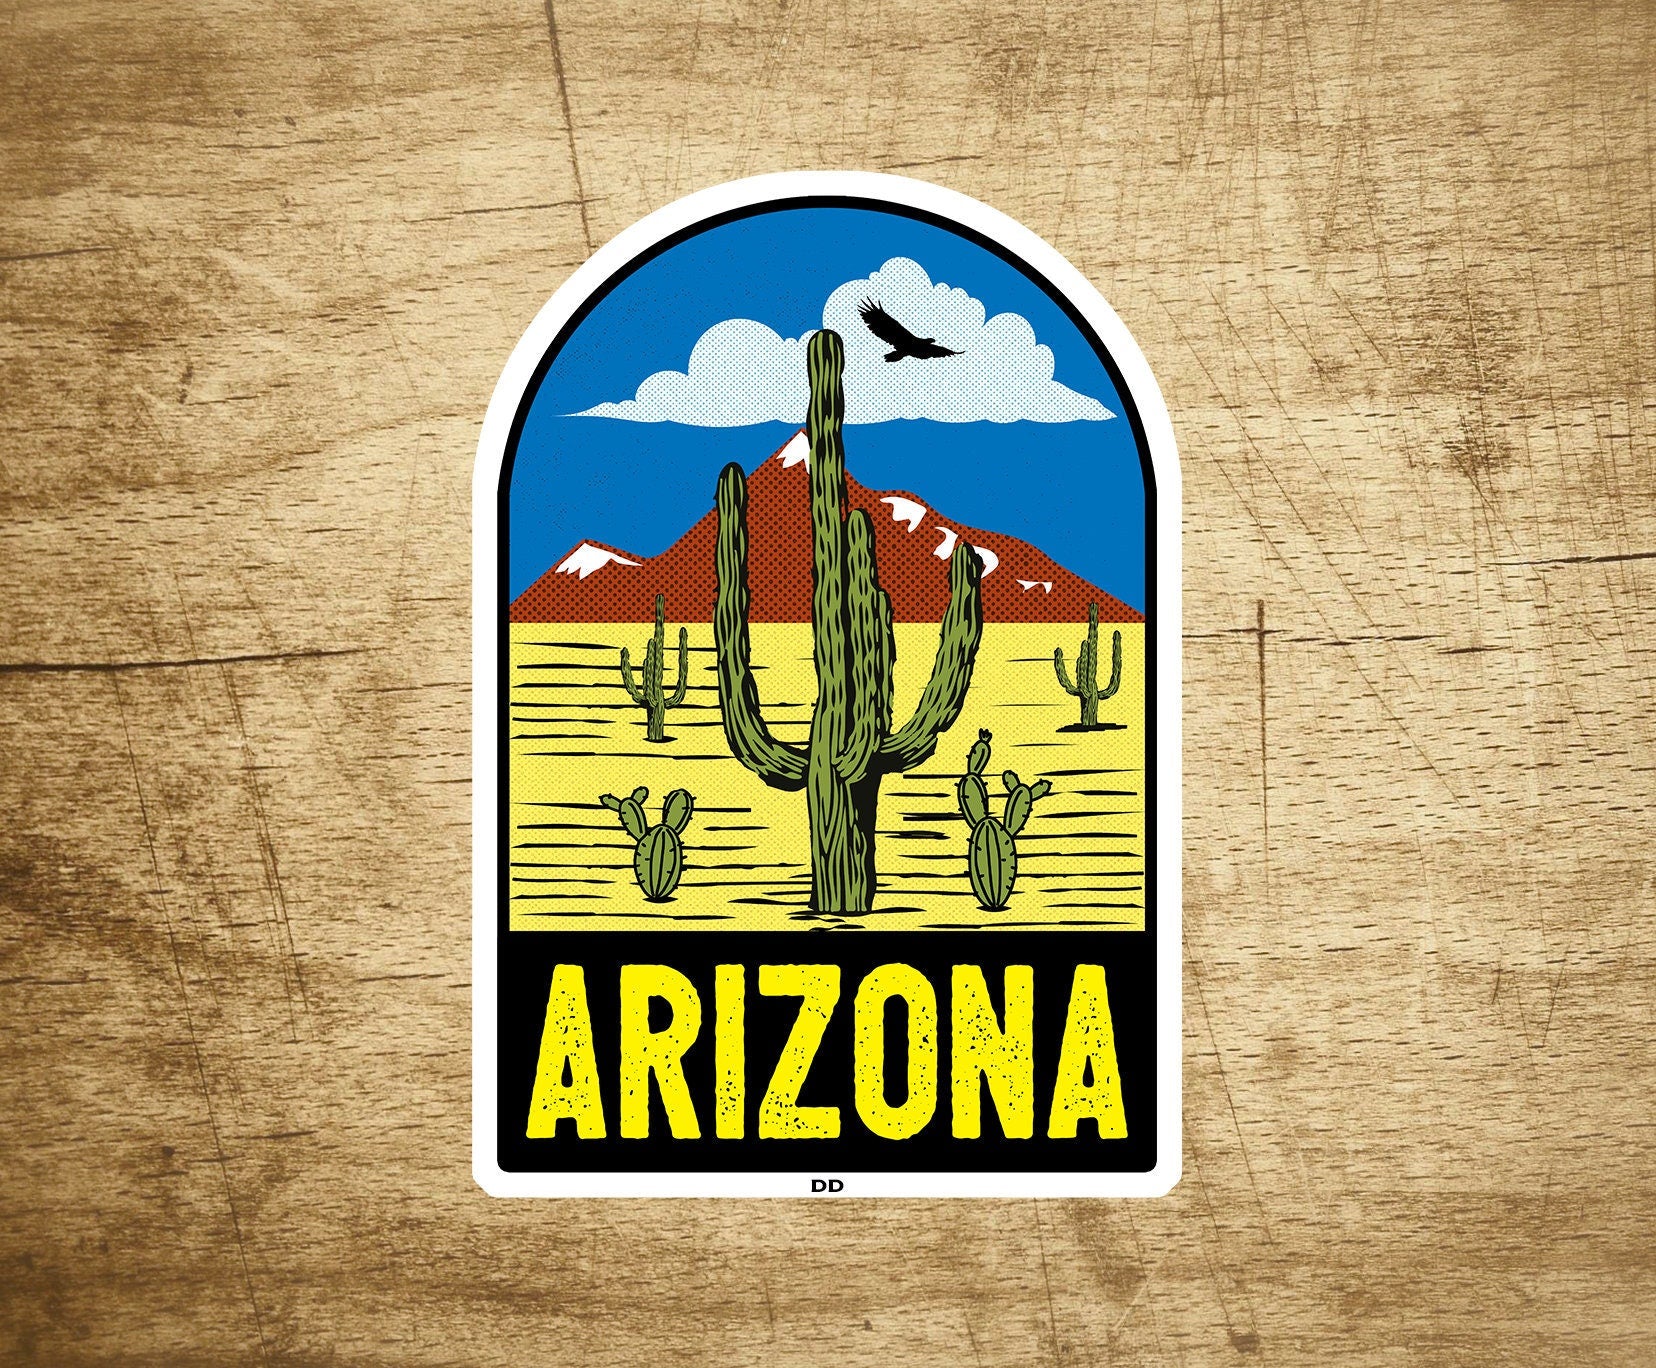 Arizona Decal Sticker Desert Mountains Cactus Vintage Travel Vinyl 3.75" x 2.6"